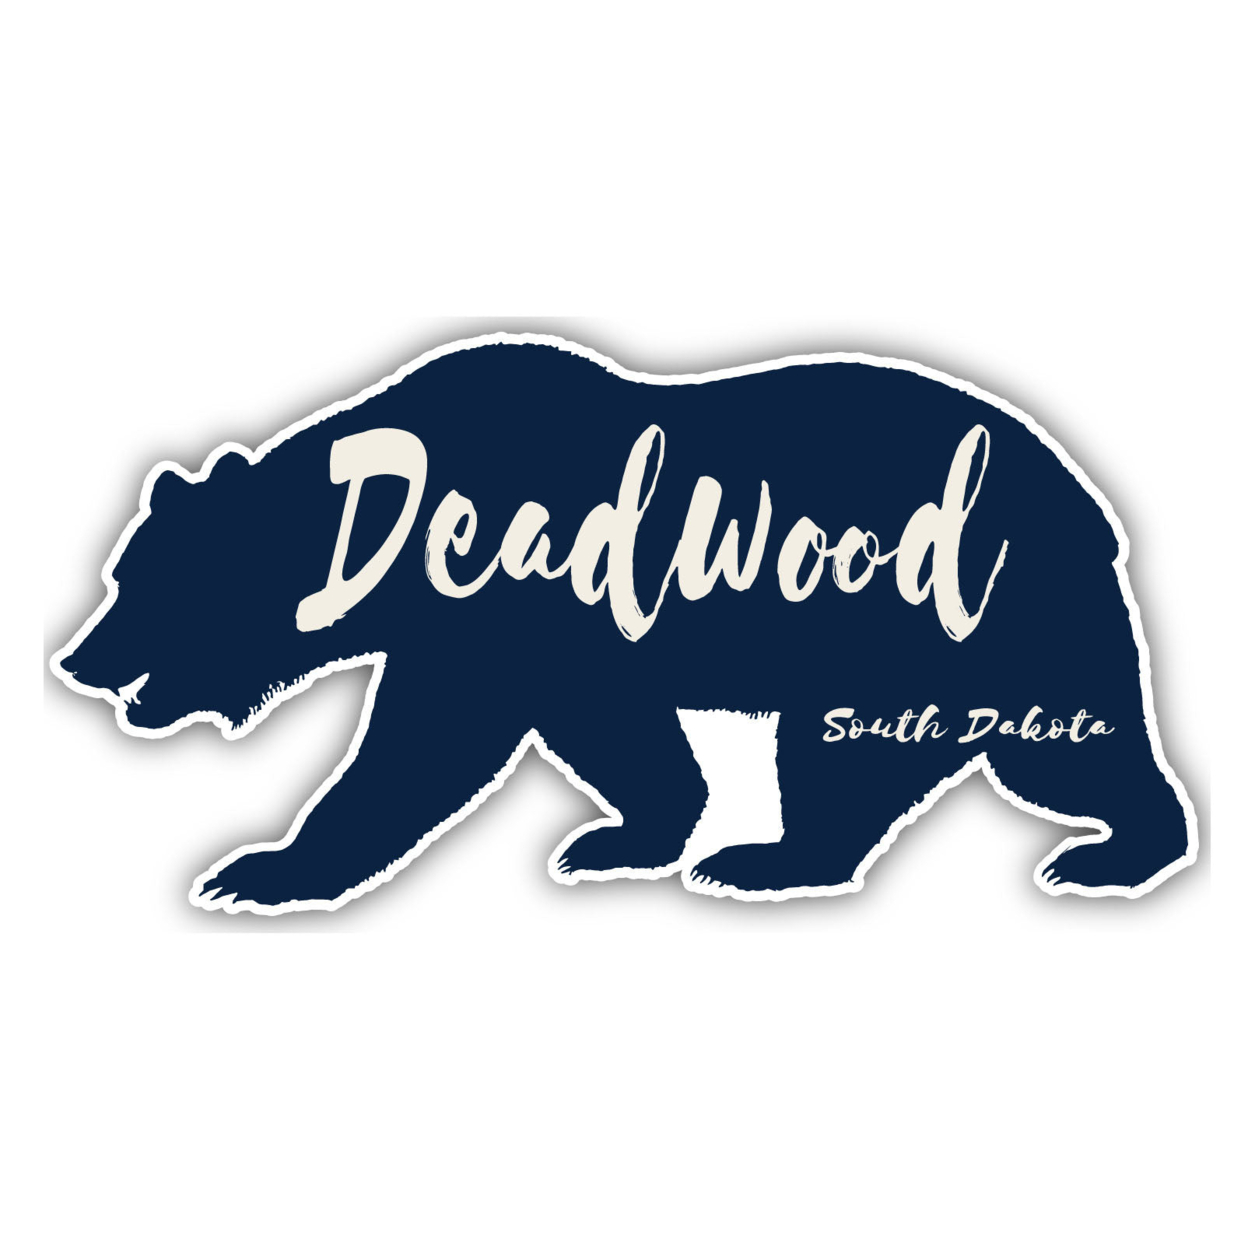 Deadwood South Dakota Souvenir Decorative Stickers (Choose Theme And Size) - 4-Pack, 10-Inch, Bear